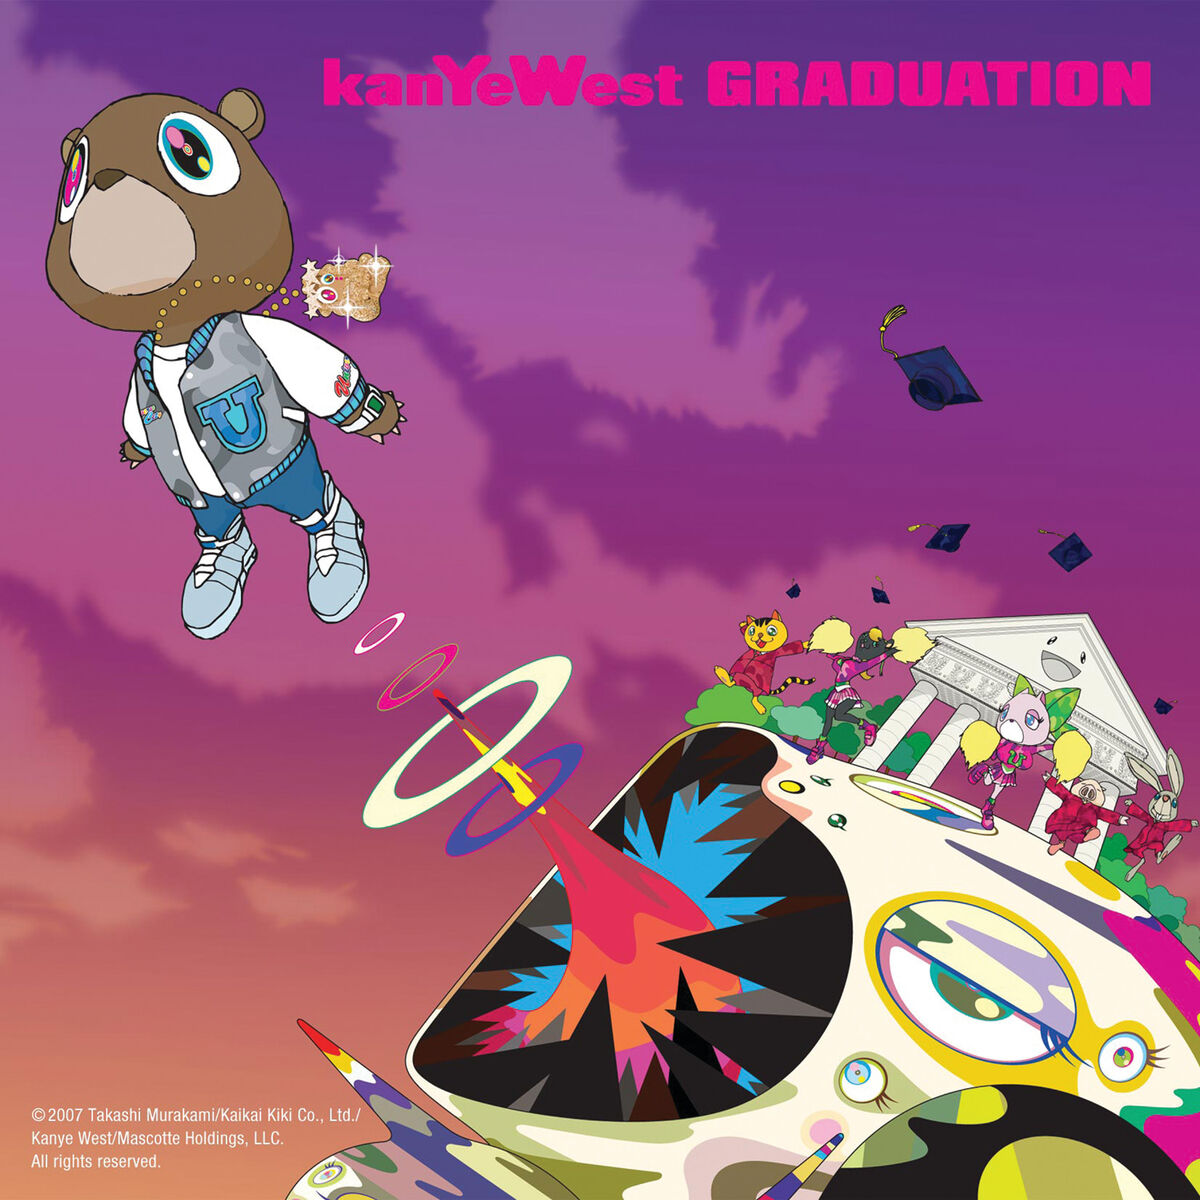 Graduation, Kanye West Wiki